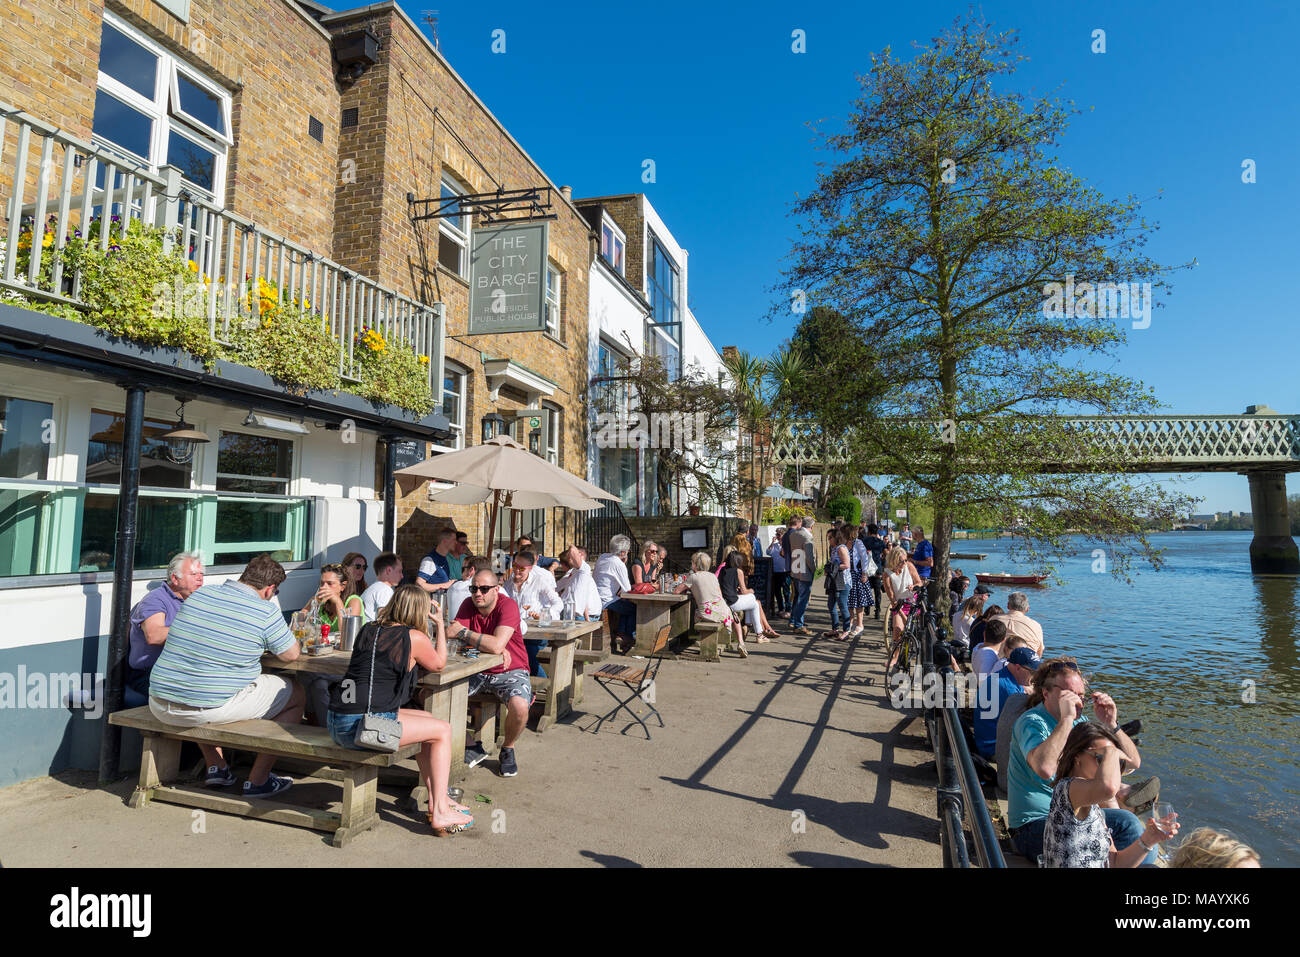 Die Stadt Barge Thames riverside Pub, Strand-auf-der-grünen, Chiswick, London, UK Stockfoto